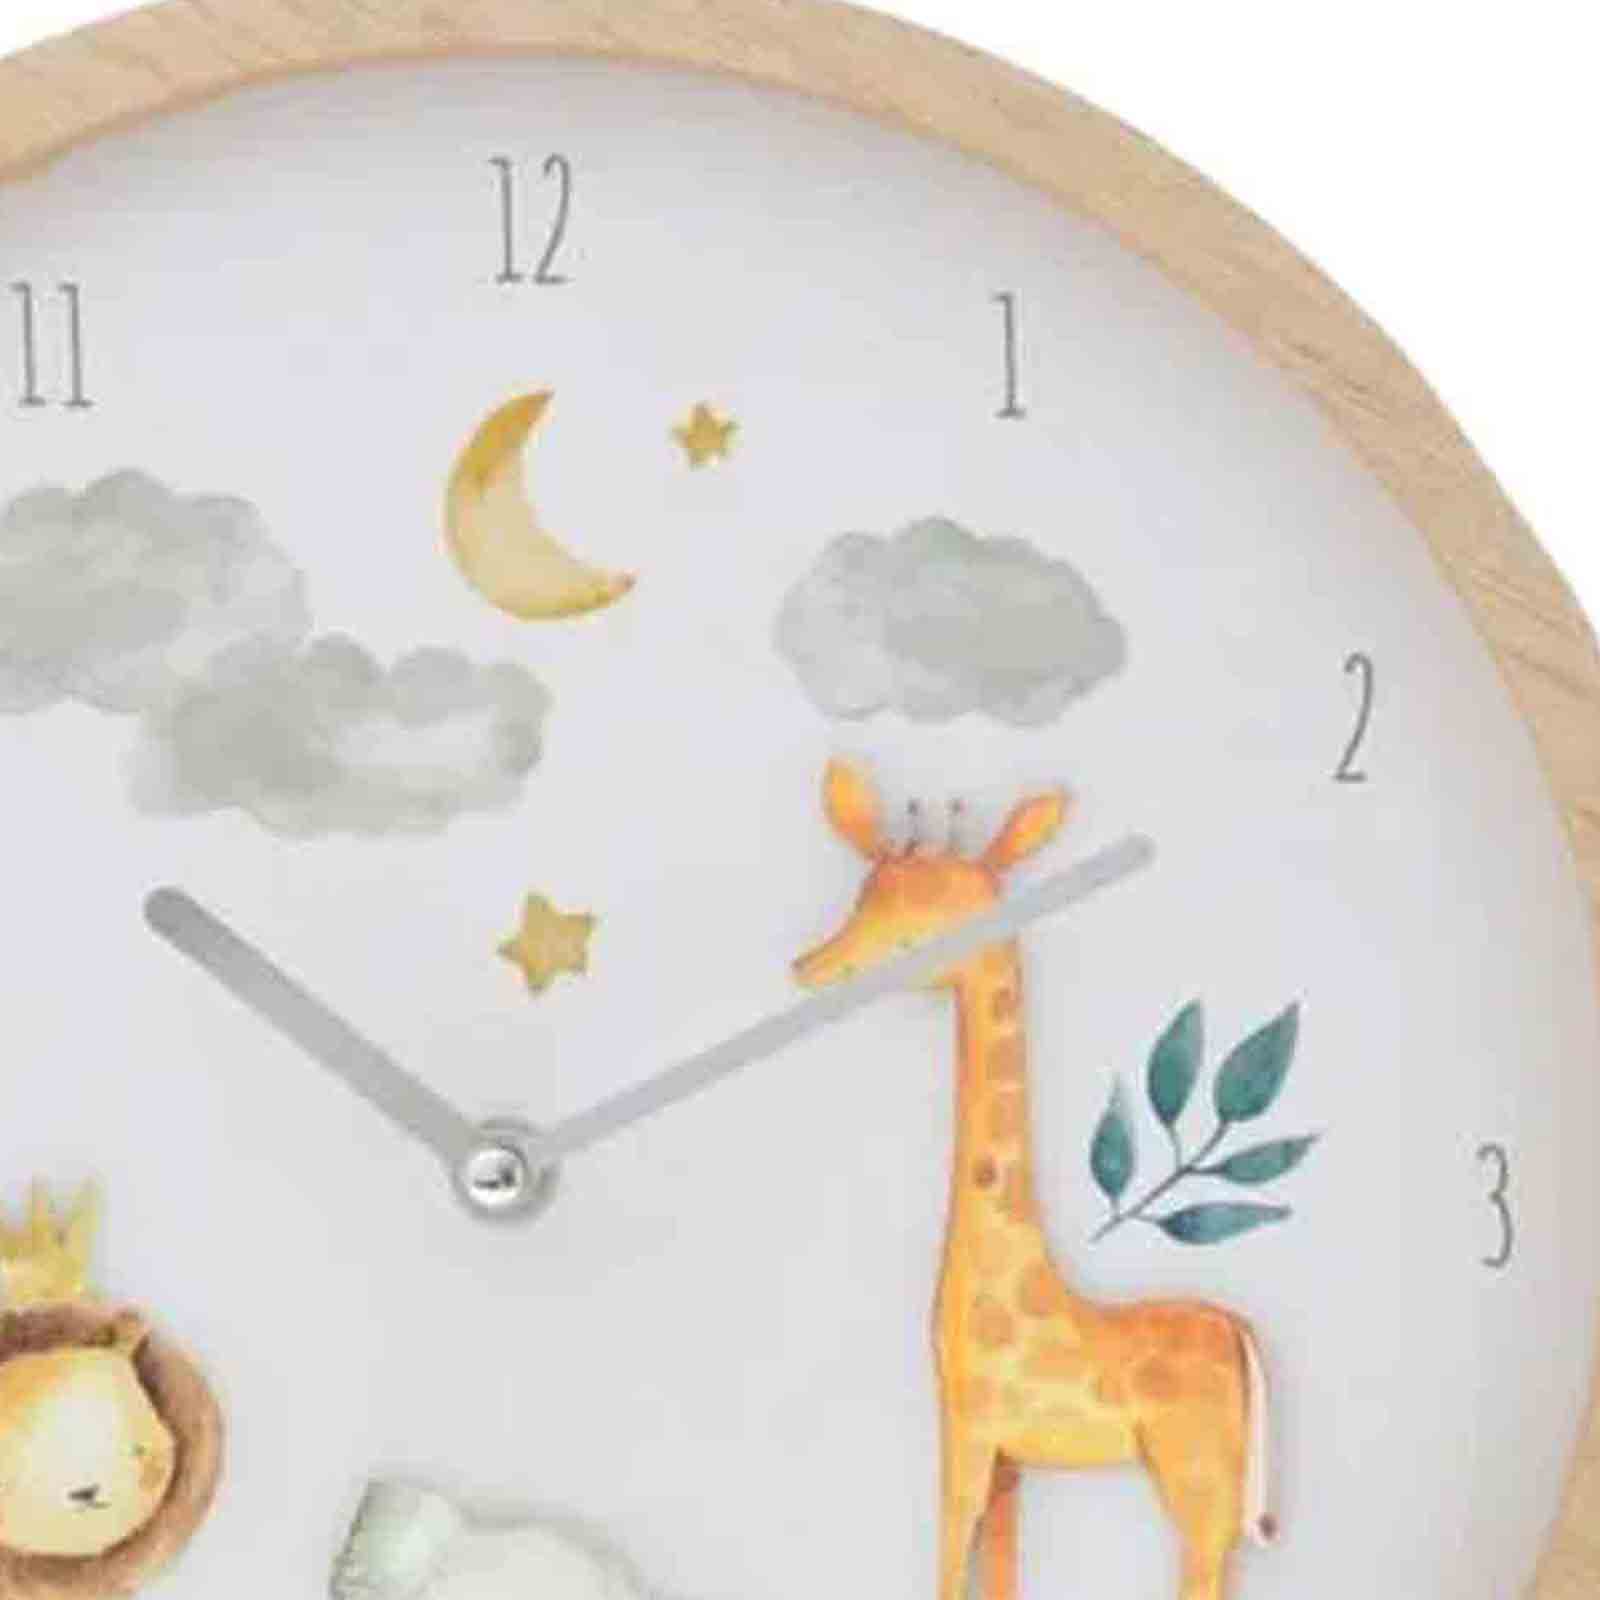 Little Moments 30cm Wooden Wall Clock